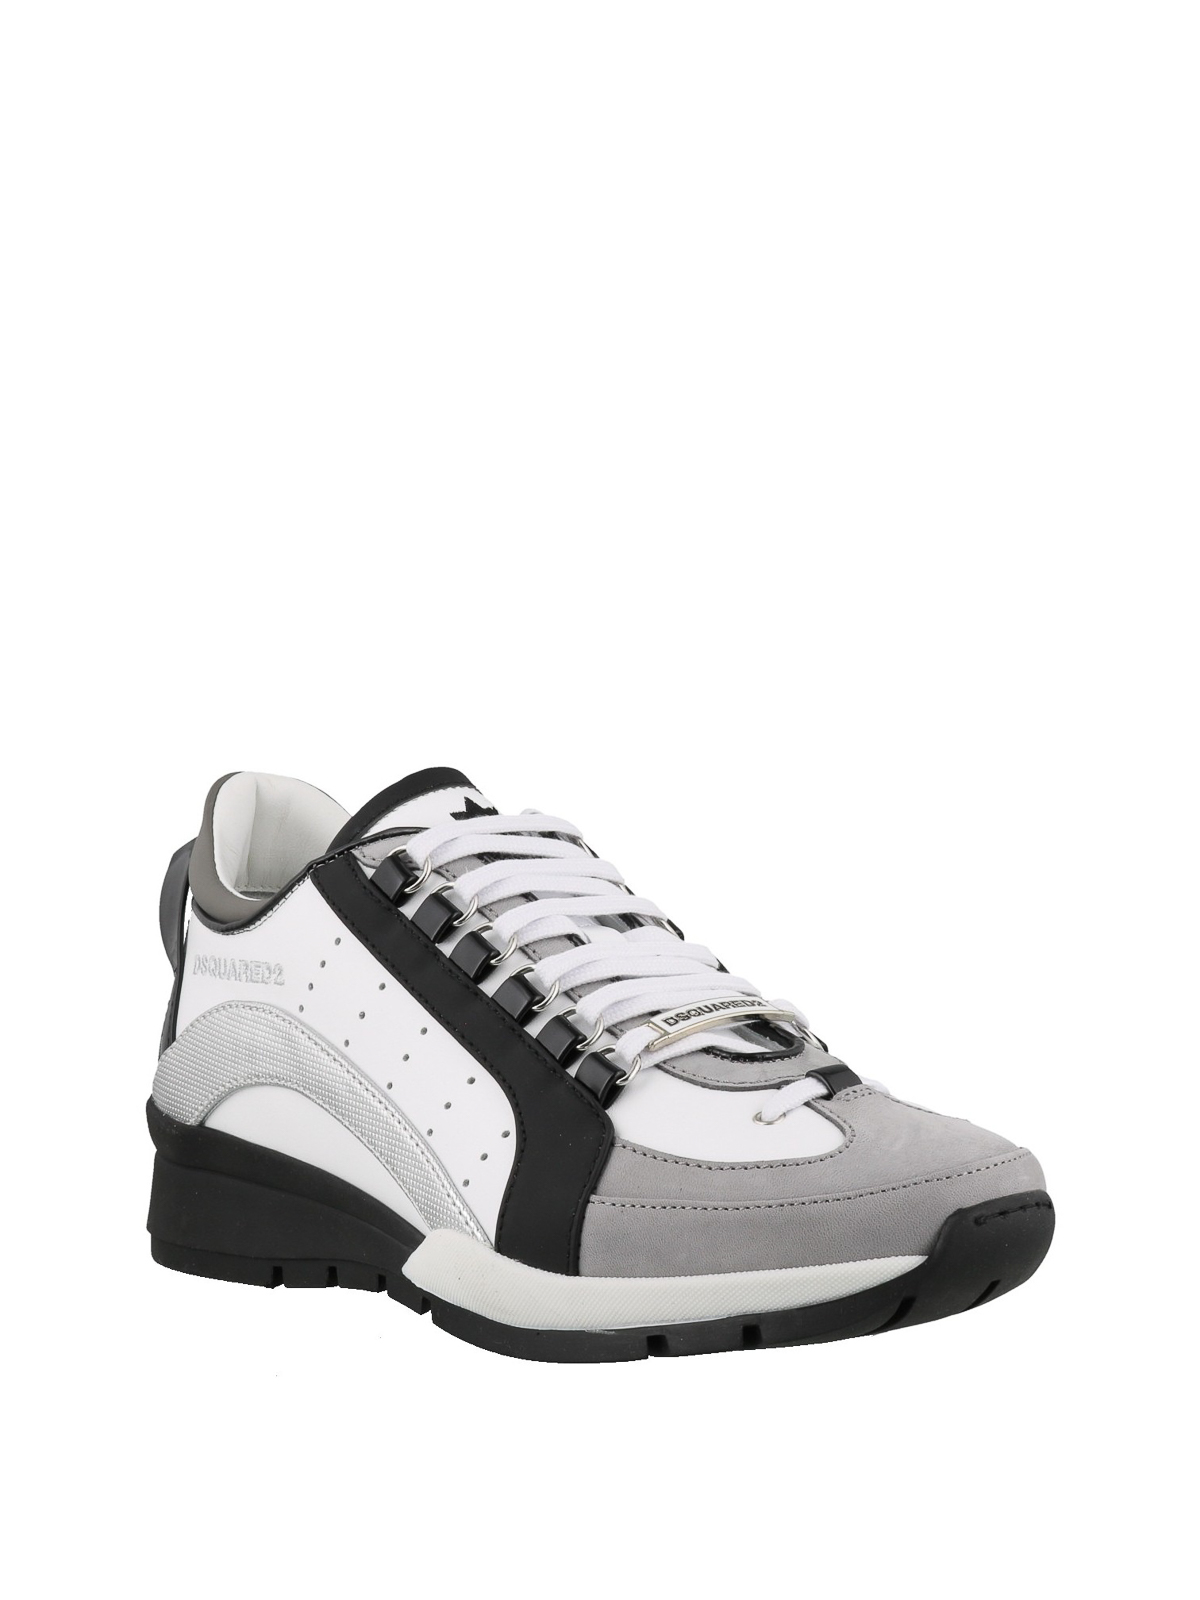 partitie Lastig Gedateerd Trainers Dsquared2 - 551 sneakers - SNM050501503060M1616 | iKRIX.com